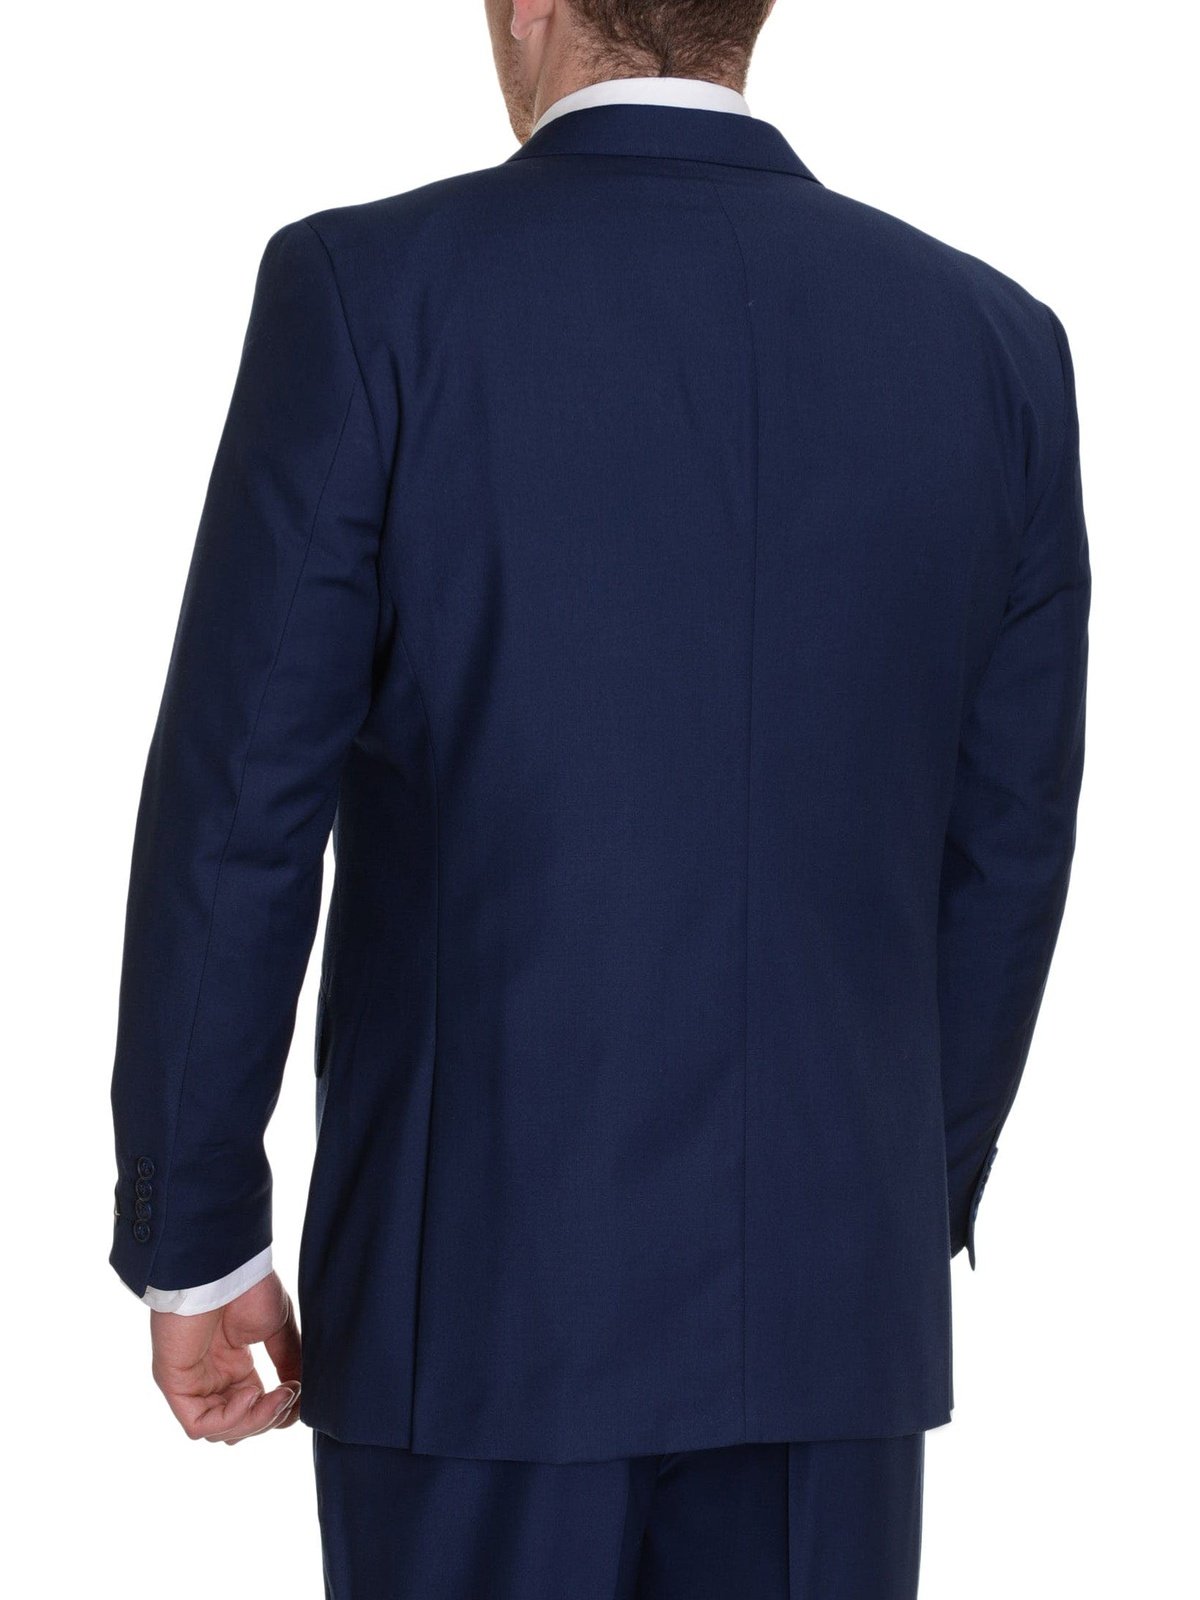 Raphael BLAZERS Raphael Mens Solid Blue Regular Fit Blazer Sportcoat